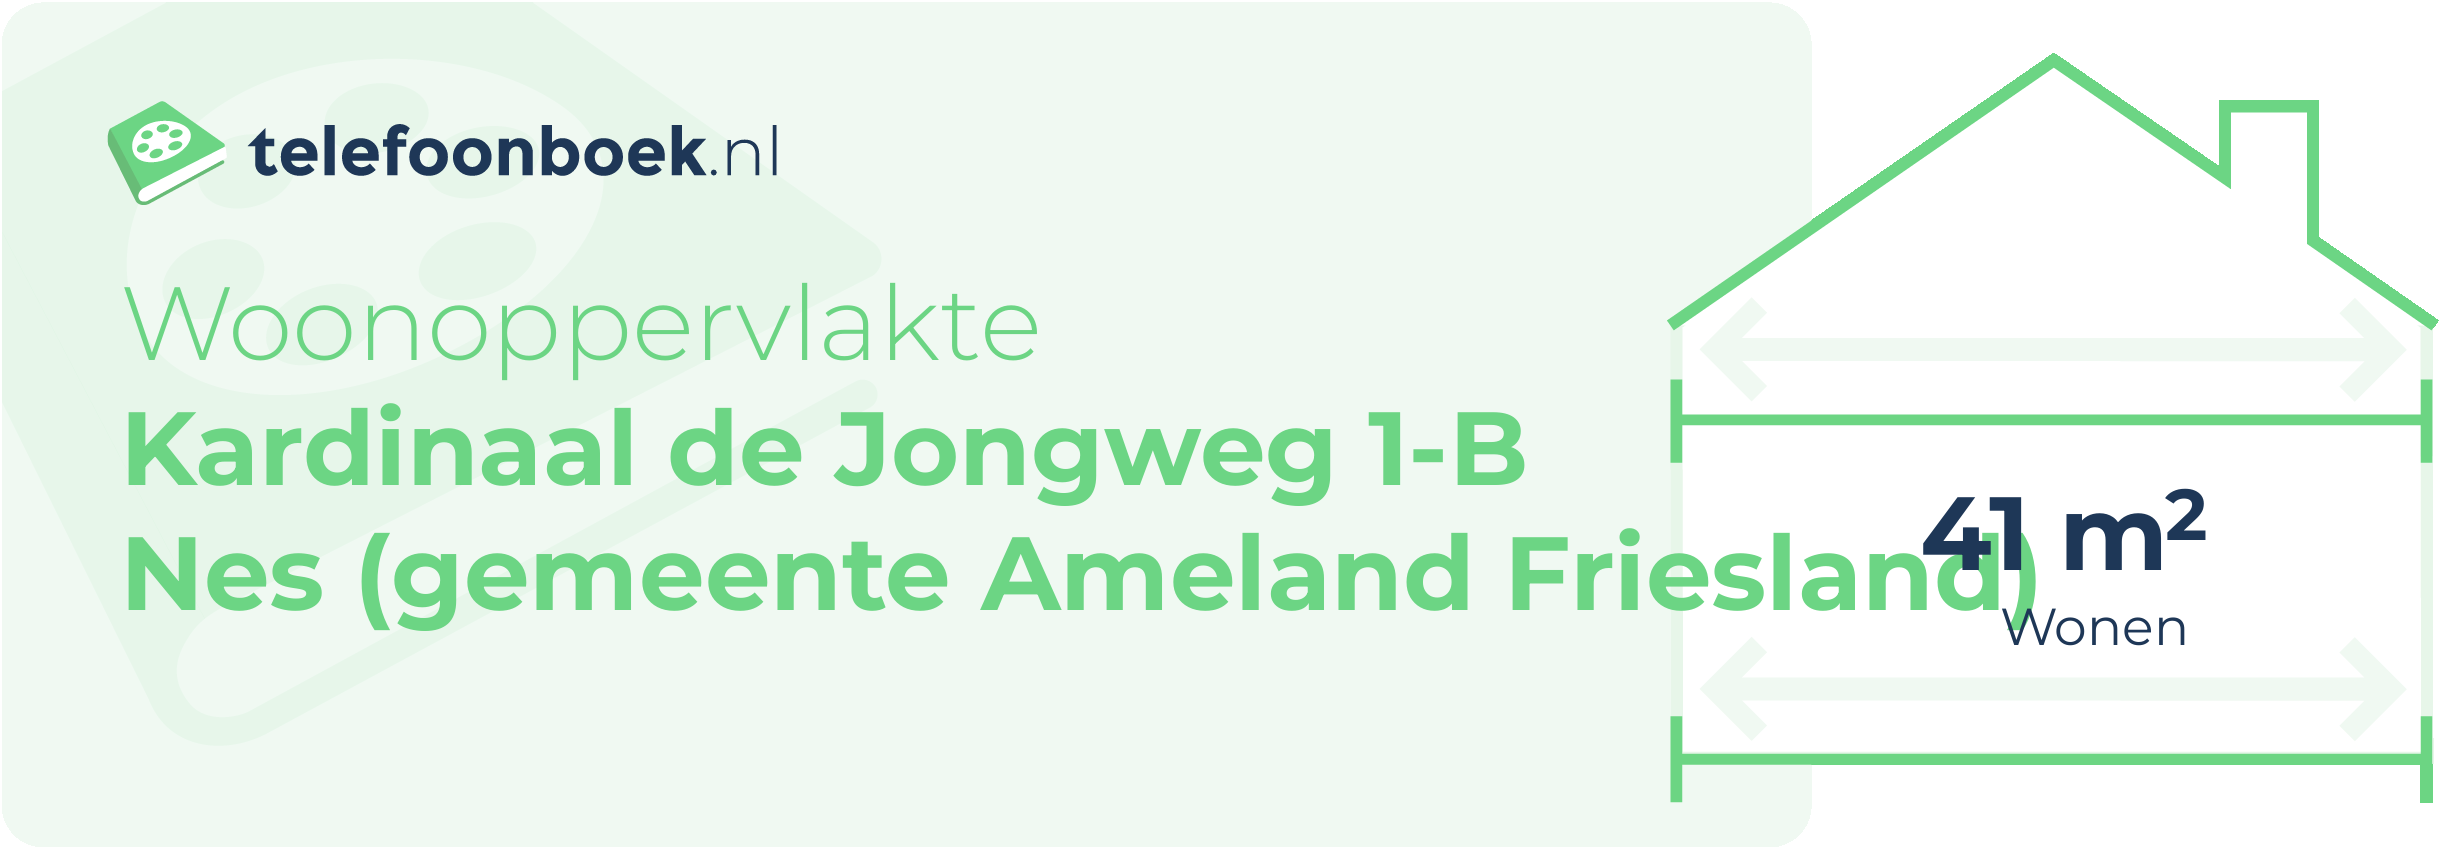 Woonoppervlakte Kardinaal De Jongweg 1-B Nes (gemeente Ameland Friesland)